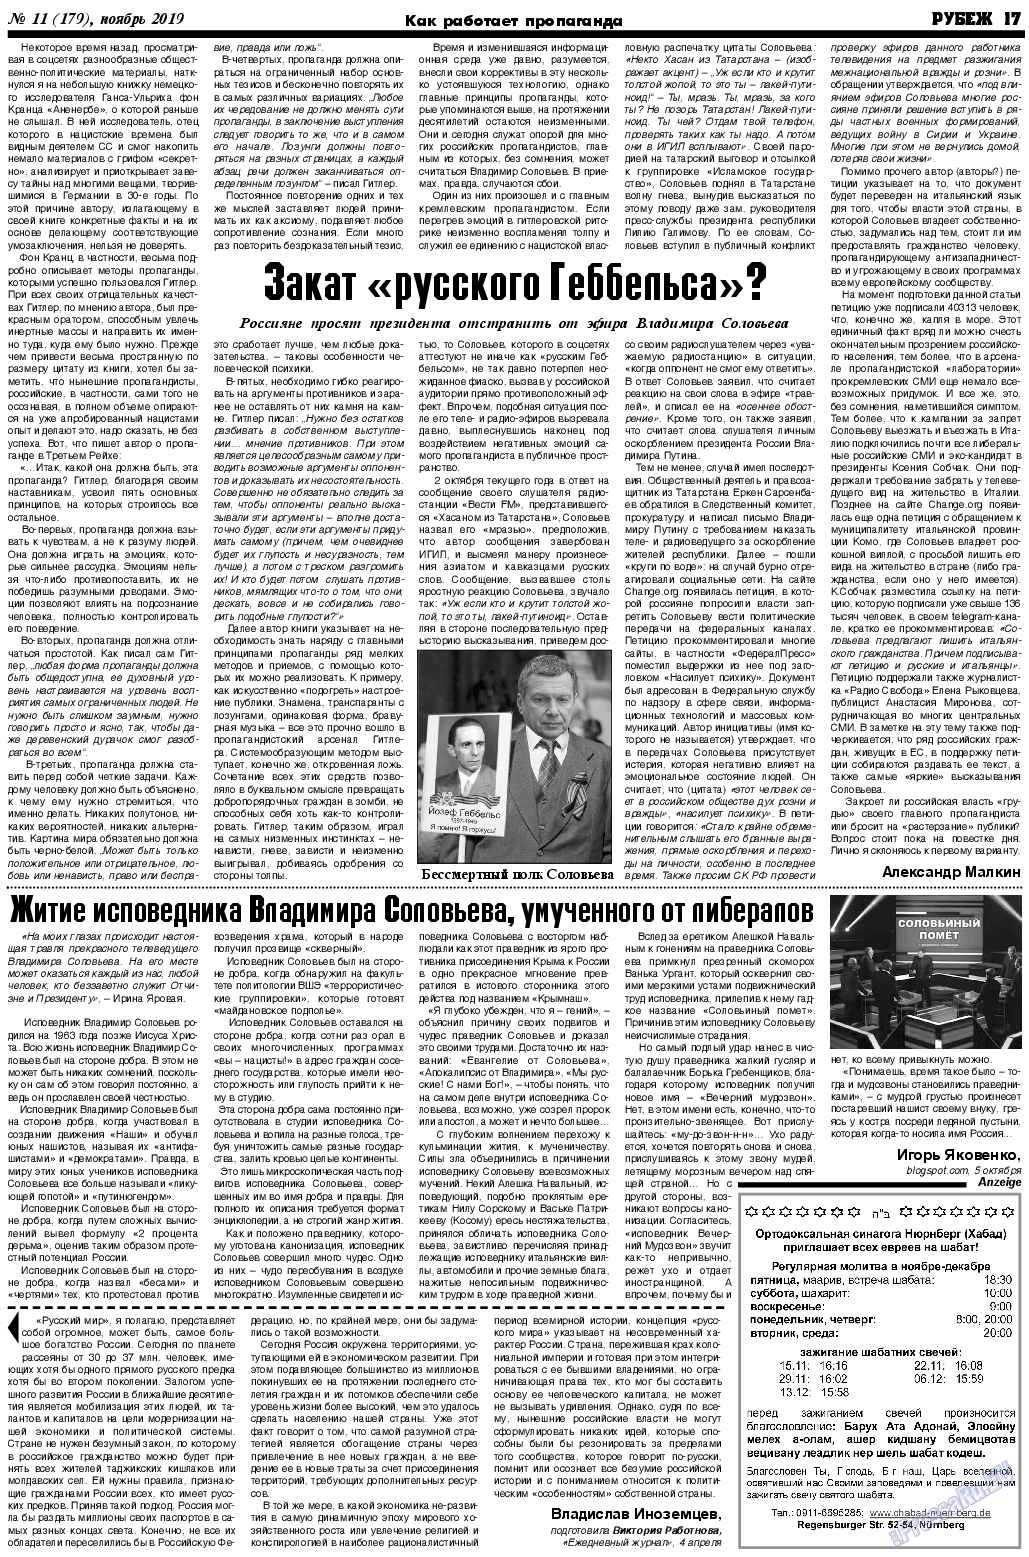 Рубеж, газета. 2019 №11 стр.17